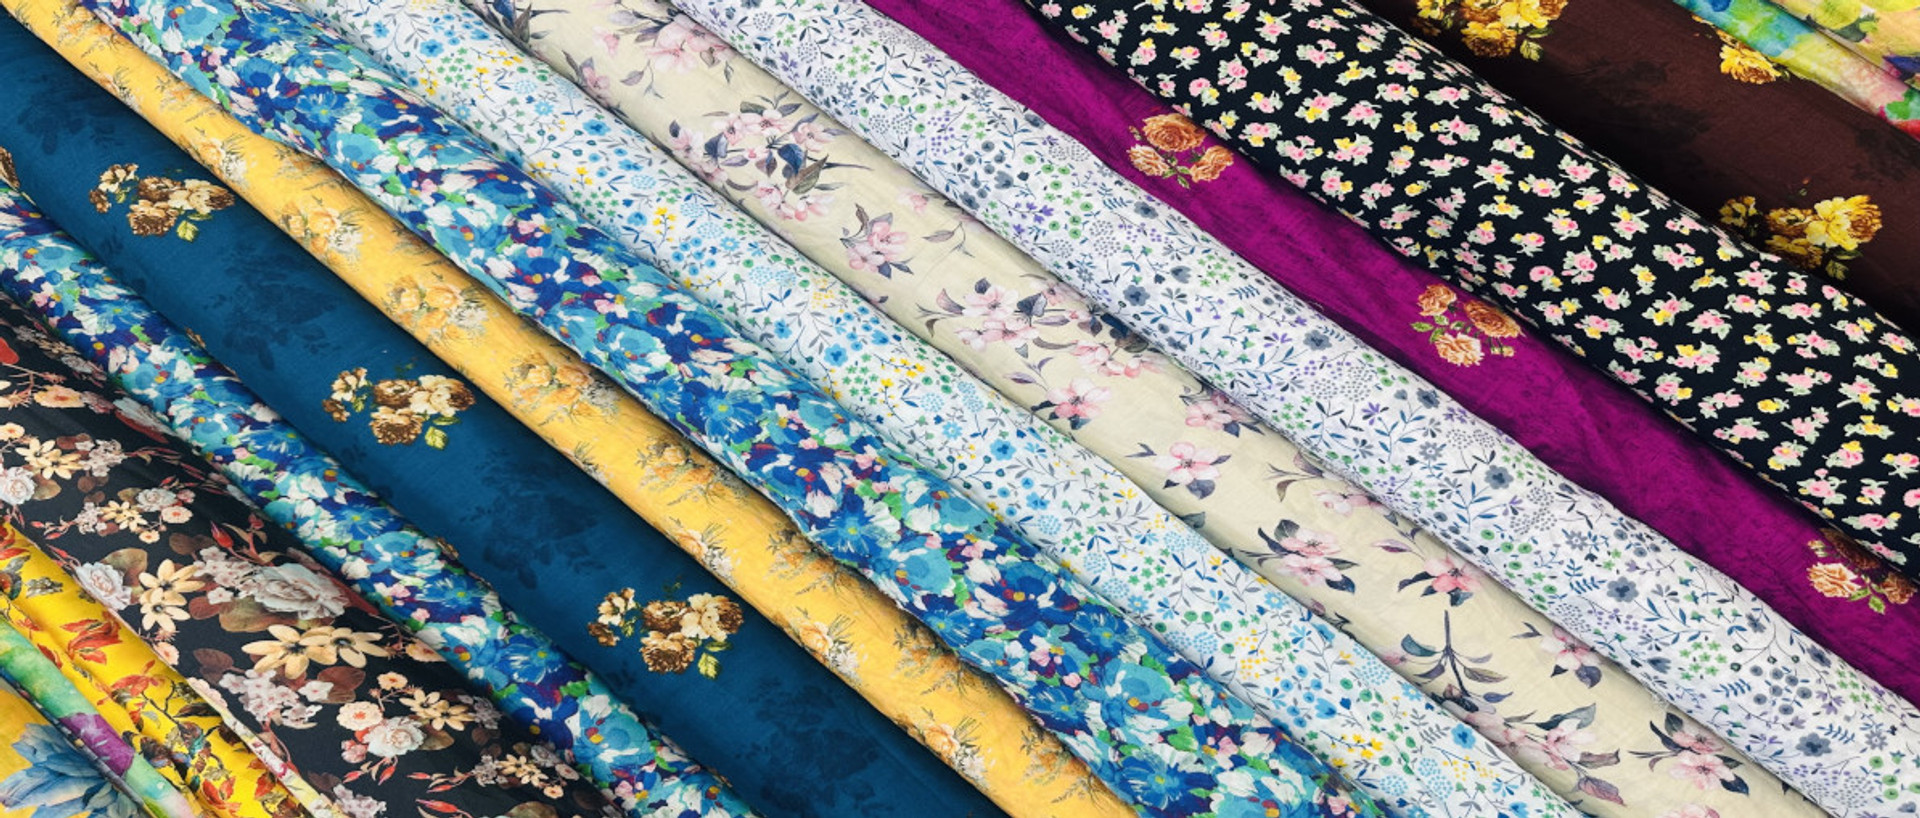 Cotton Fabric: 100% Cotton Fabrics from Italy by Cotonificio Albini, SKU  00072986 at $50 — Buy Cotton Fabrics Online